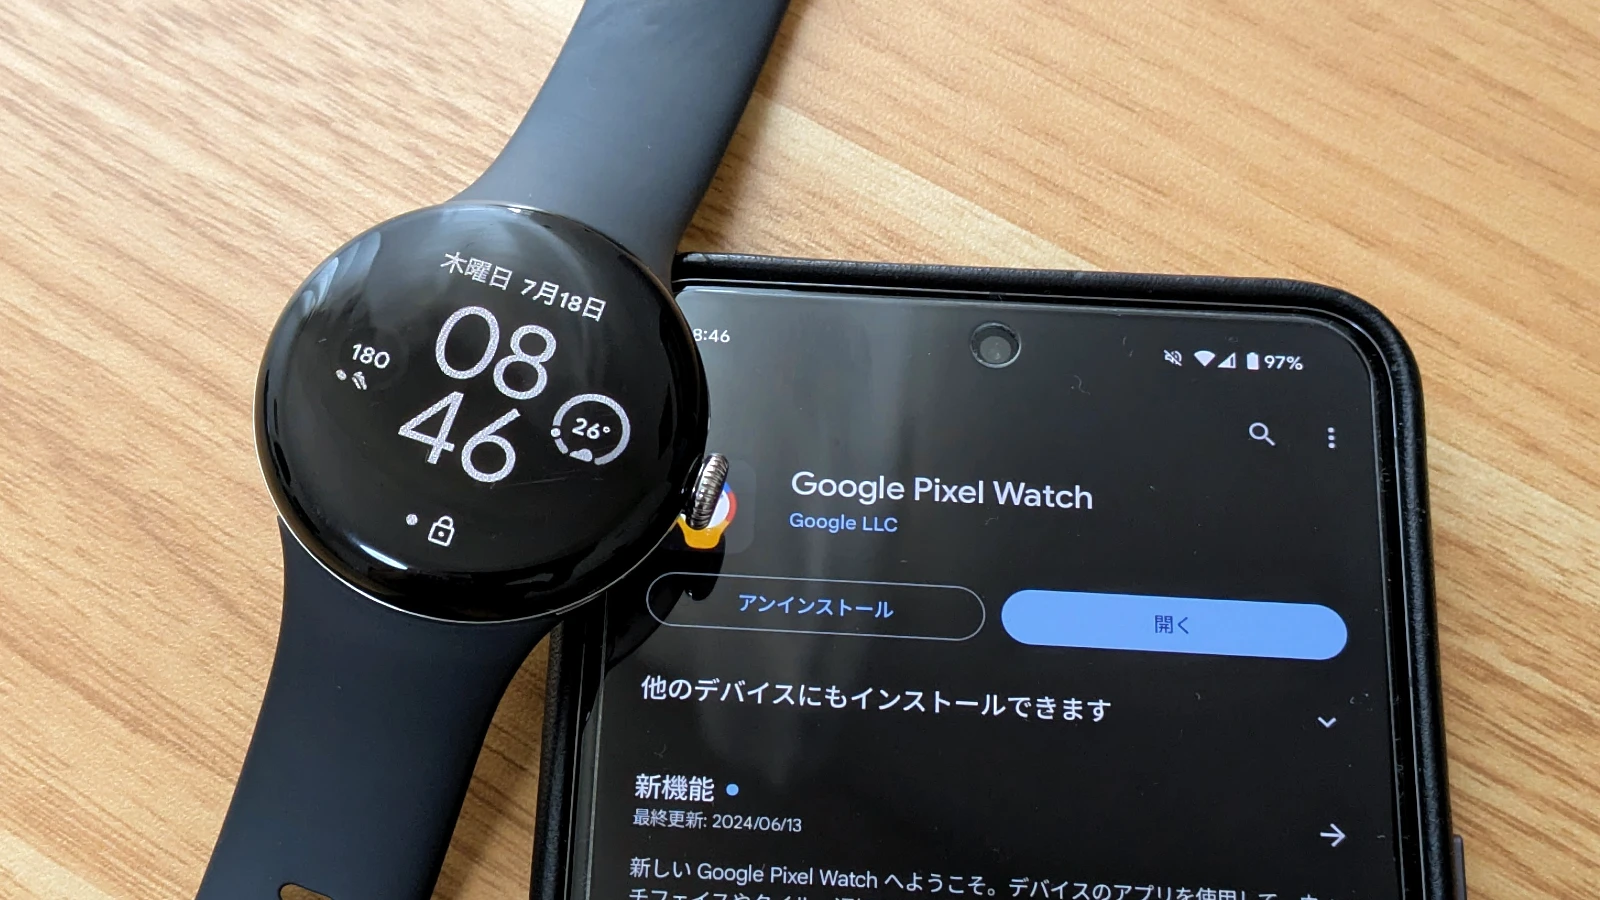 Google Pixel Watch 2 と Pixel Watch companion アプリを並べた写真